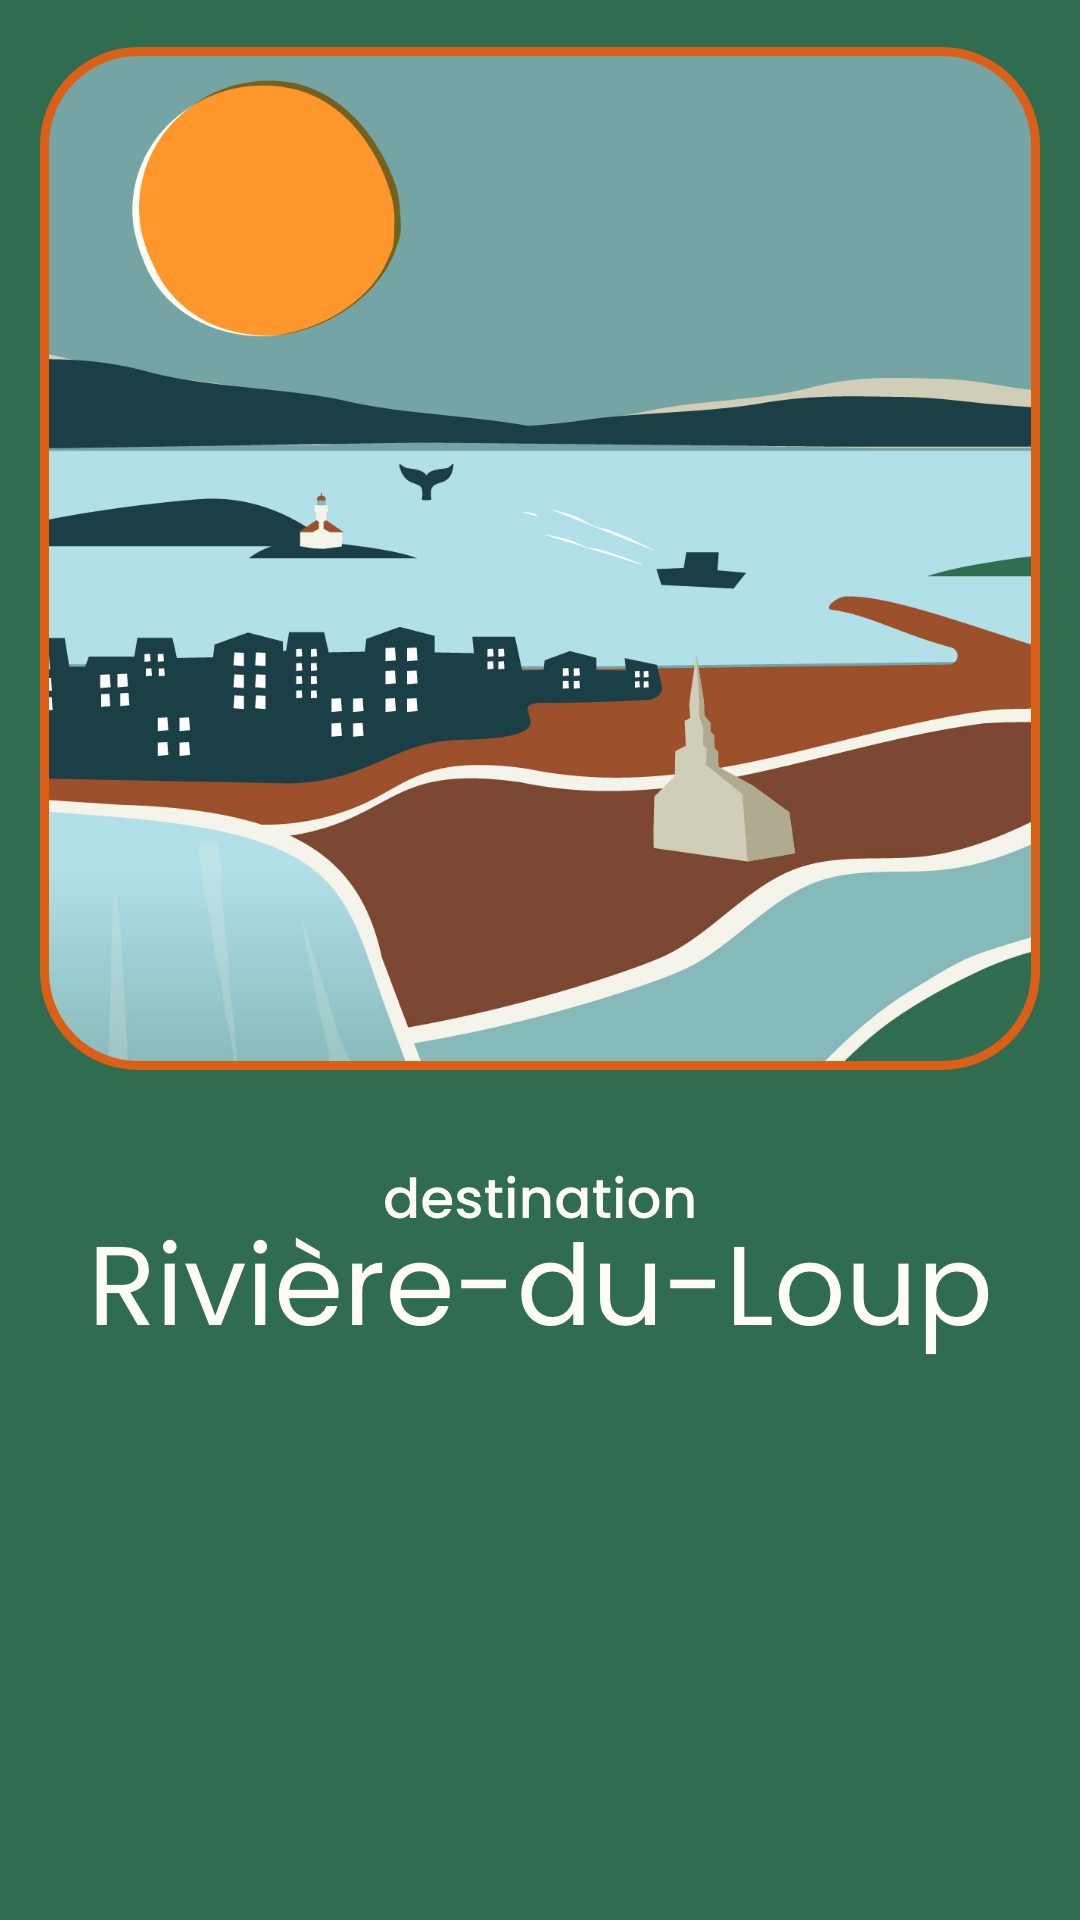 Illustration Style 2 - Rivière-du-Loup